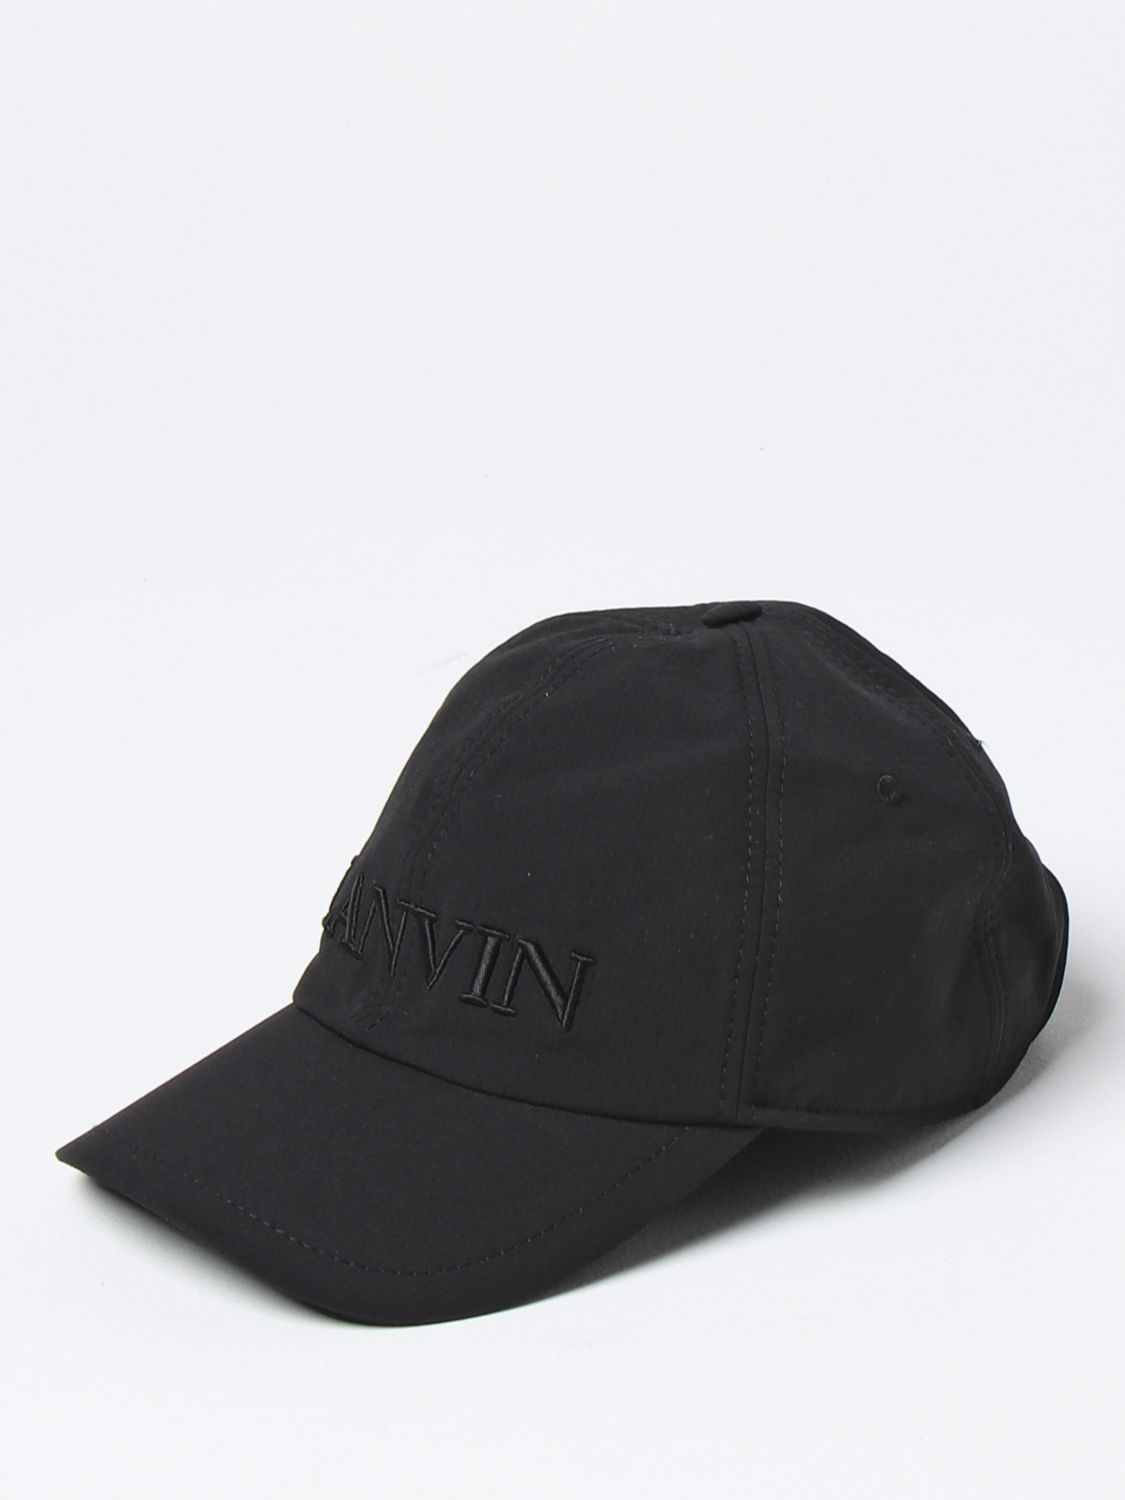 LANVIN: hat for man - Black | Lanvin hat AMHATQOORISTP23 online on ...